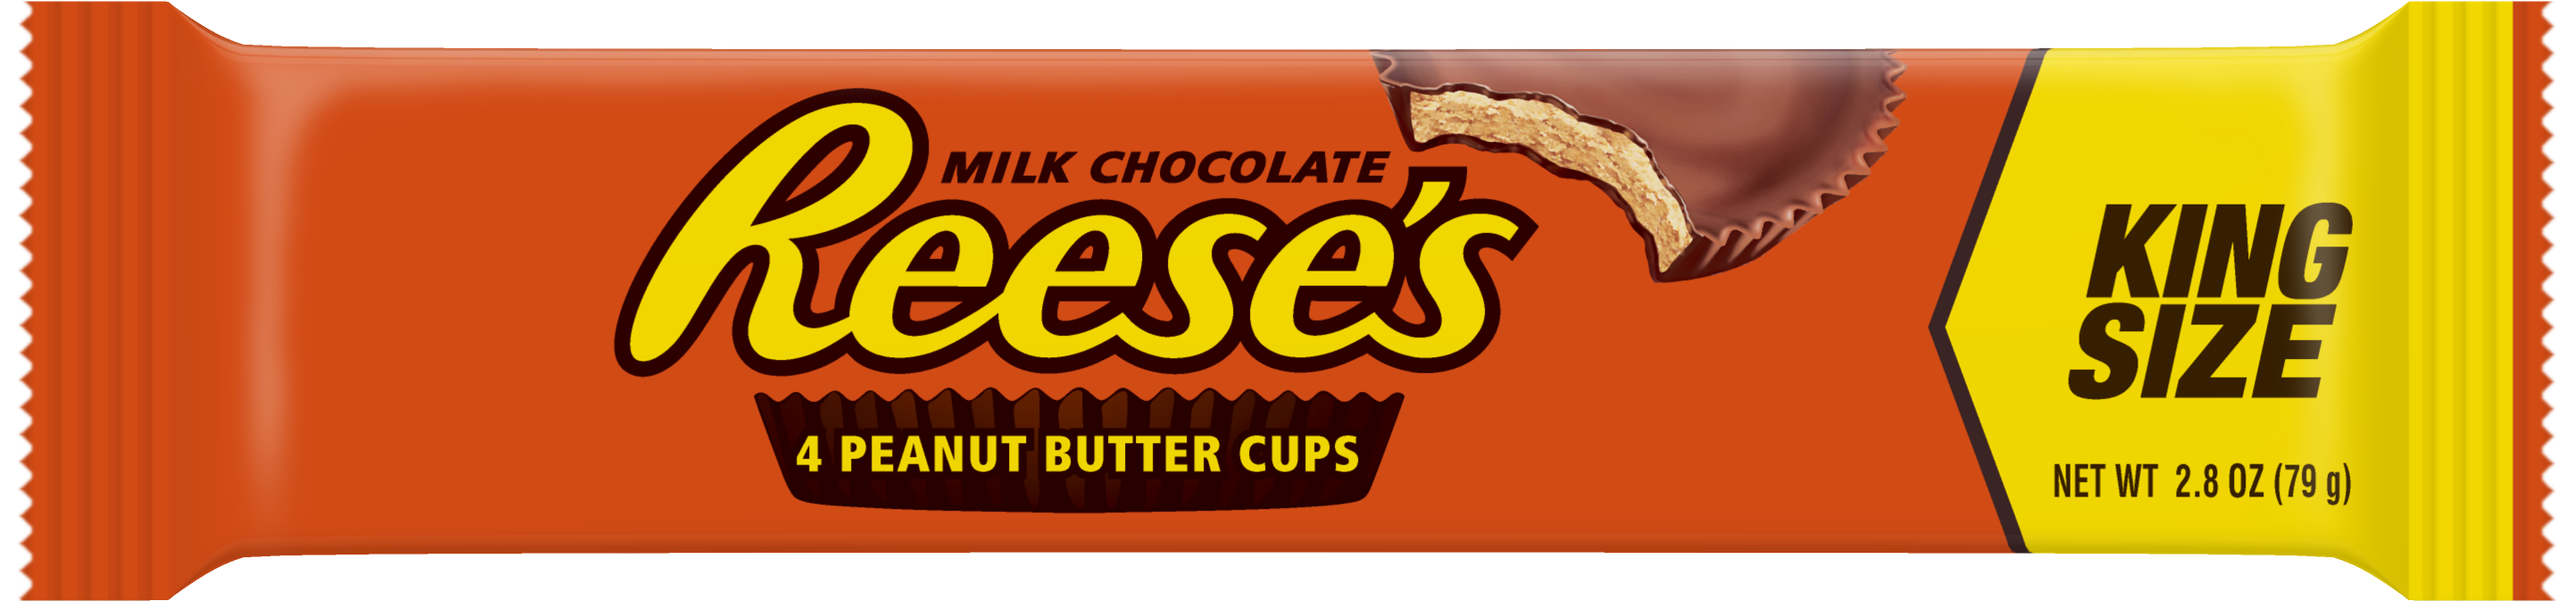 Butter cups. Конфеты Reese's. Reese s арахисовая паста в Молочном шоколаде. Конфеты с арахисовой пастой Reeses. Reese's Peanut Butter Cups.